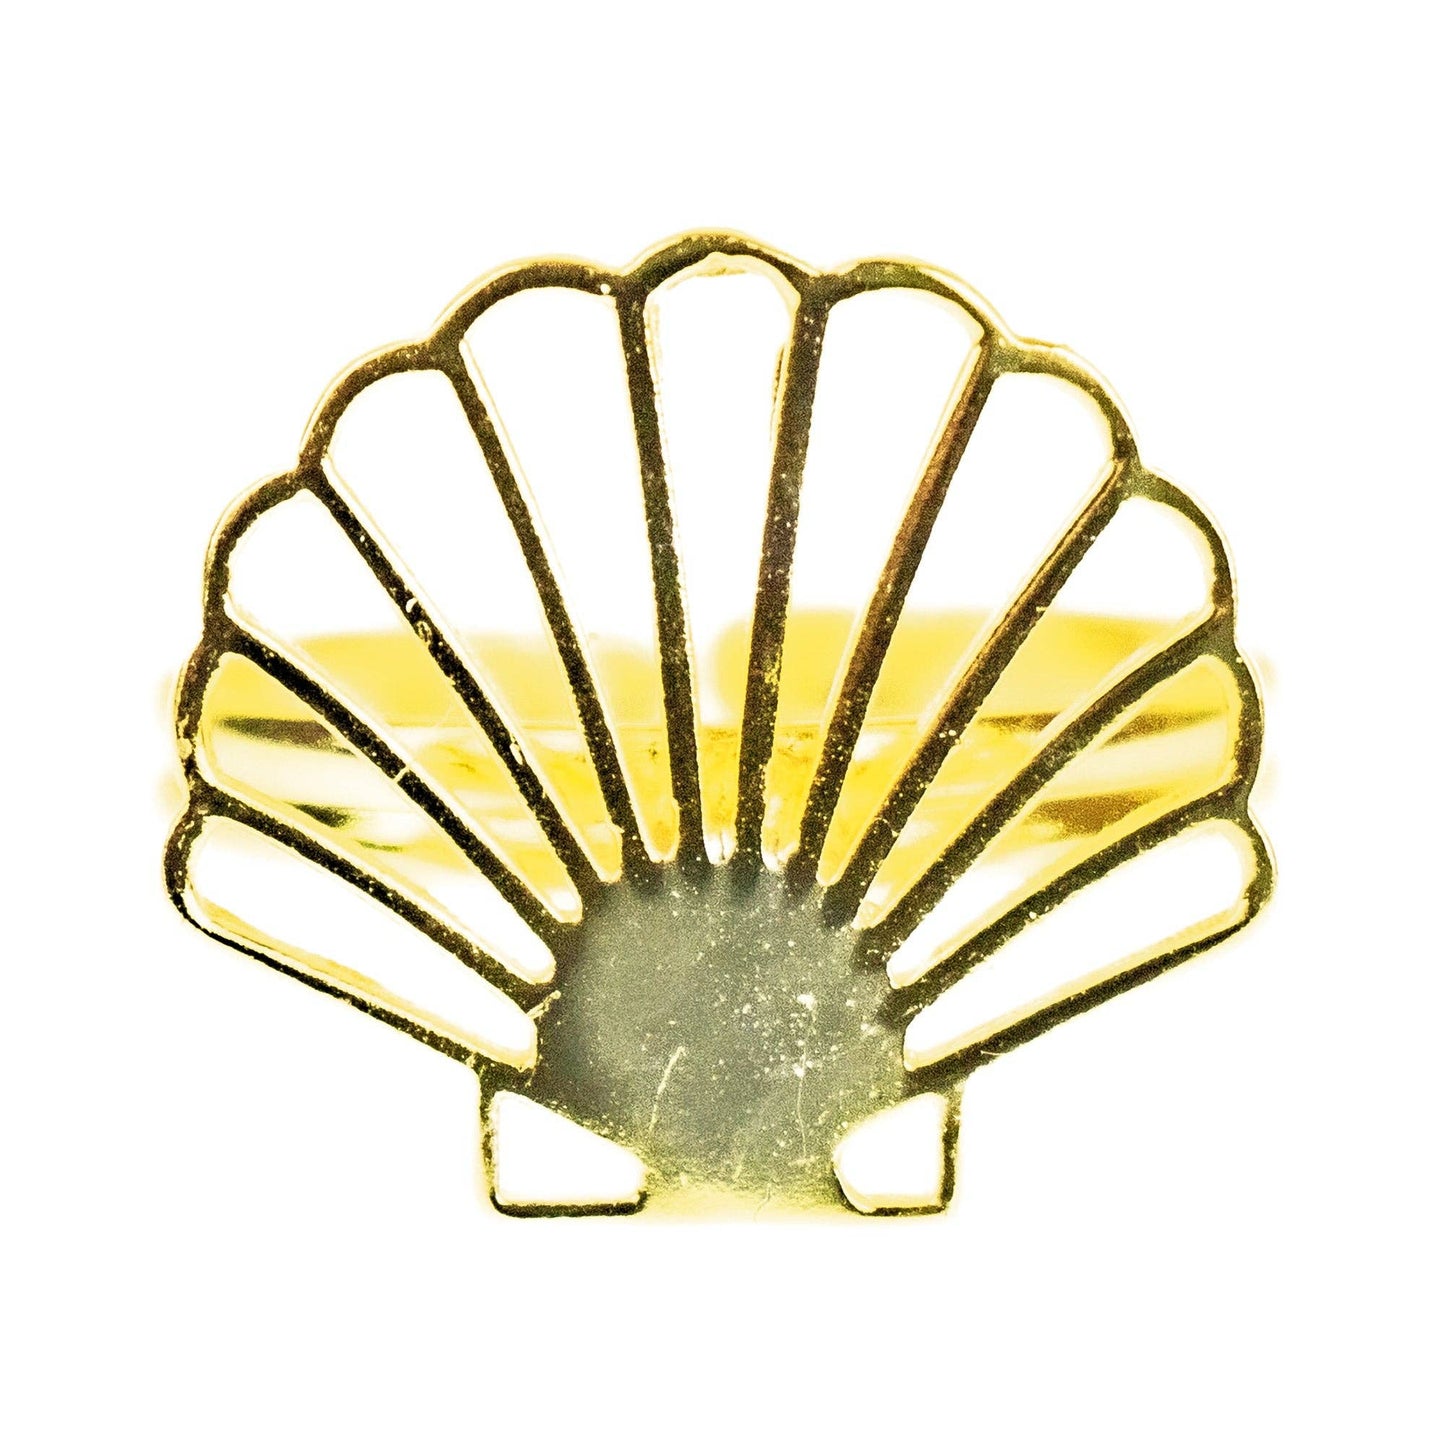 Shell Design Adjustable Brass Ring, Golden Hue SINGLE m/3 INV 1=3